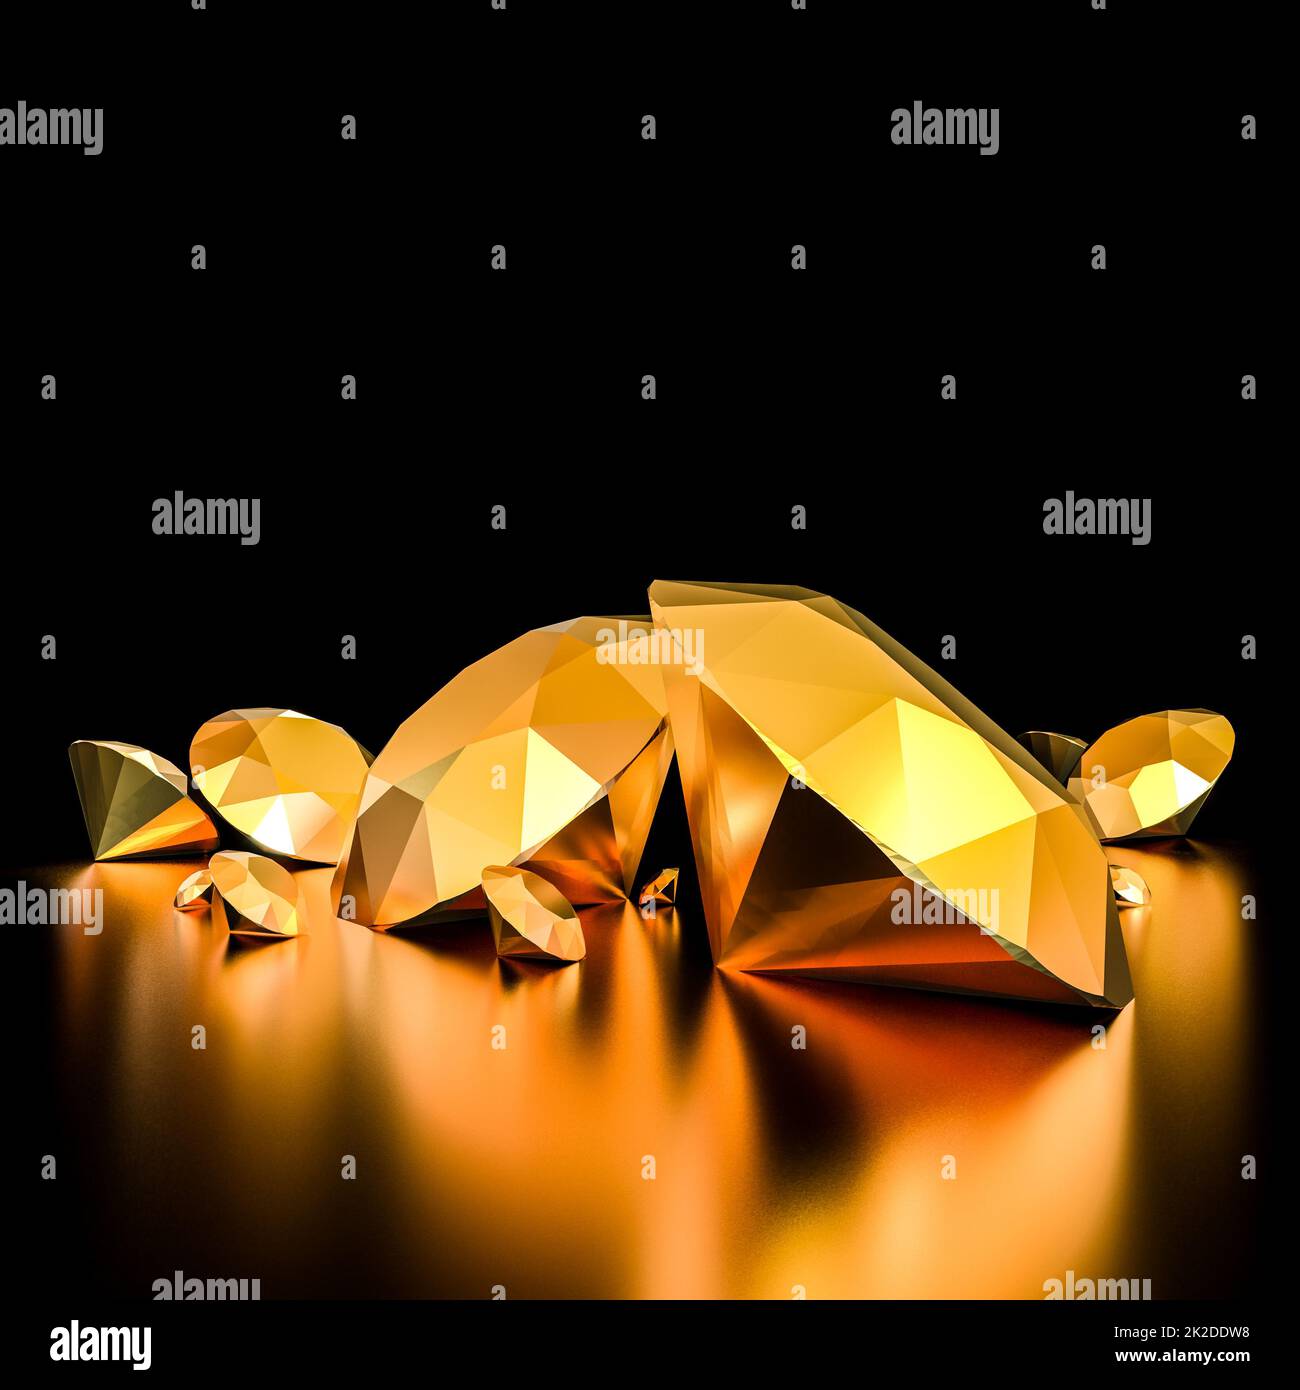 metallic gold diamonds on a black background. Stock Photo